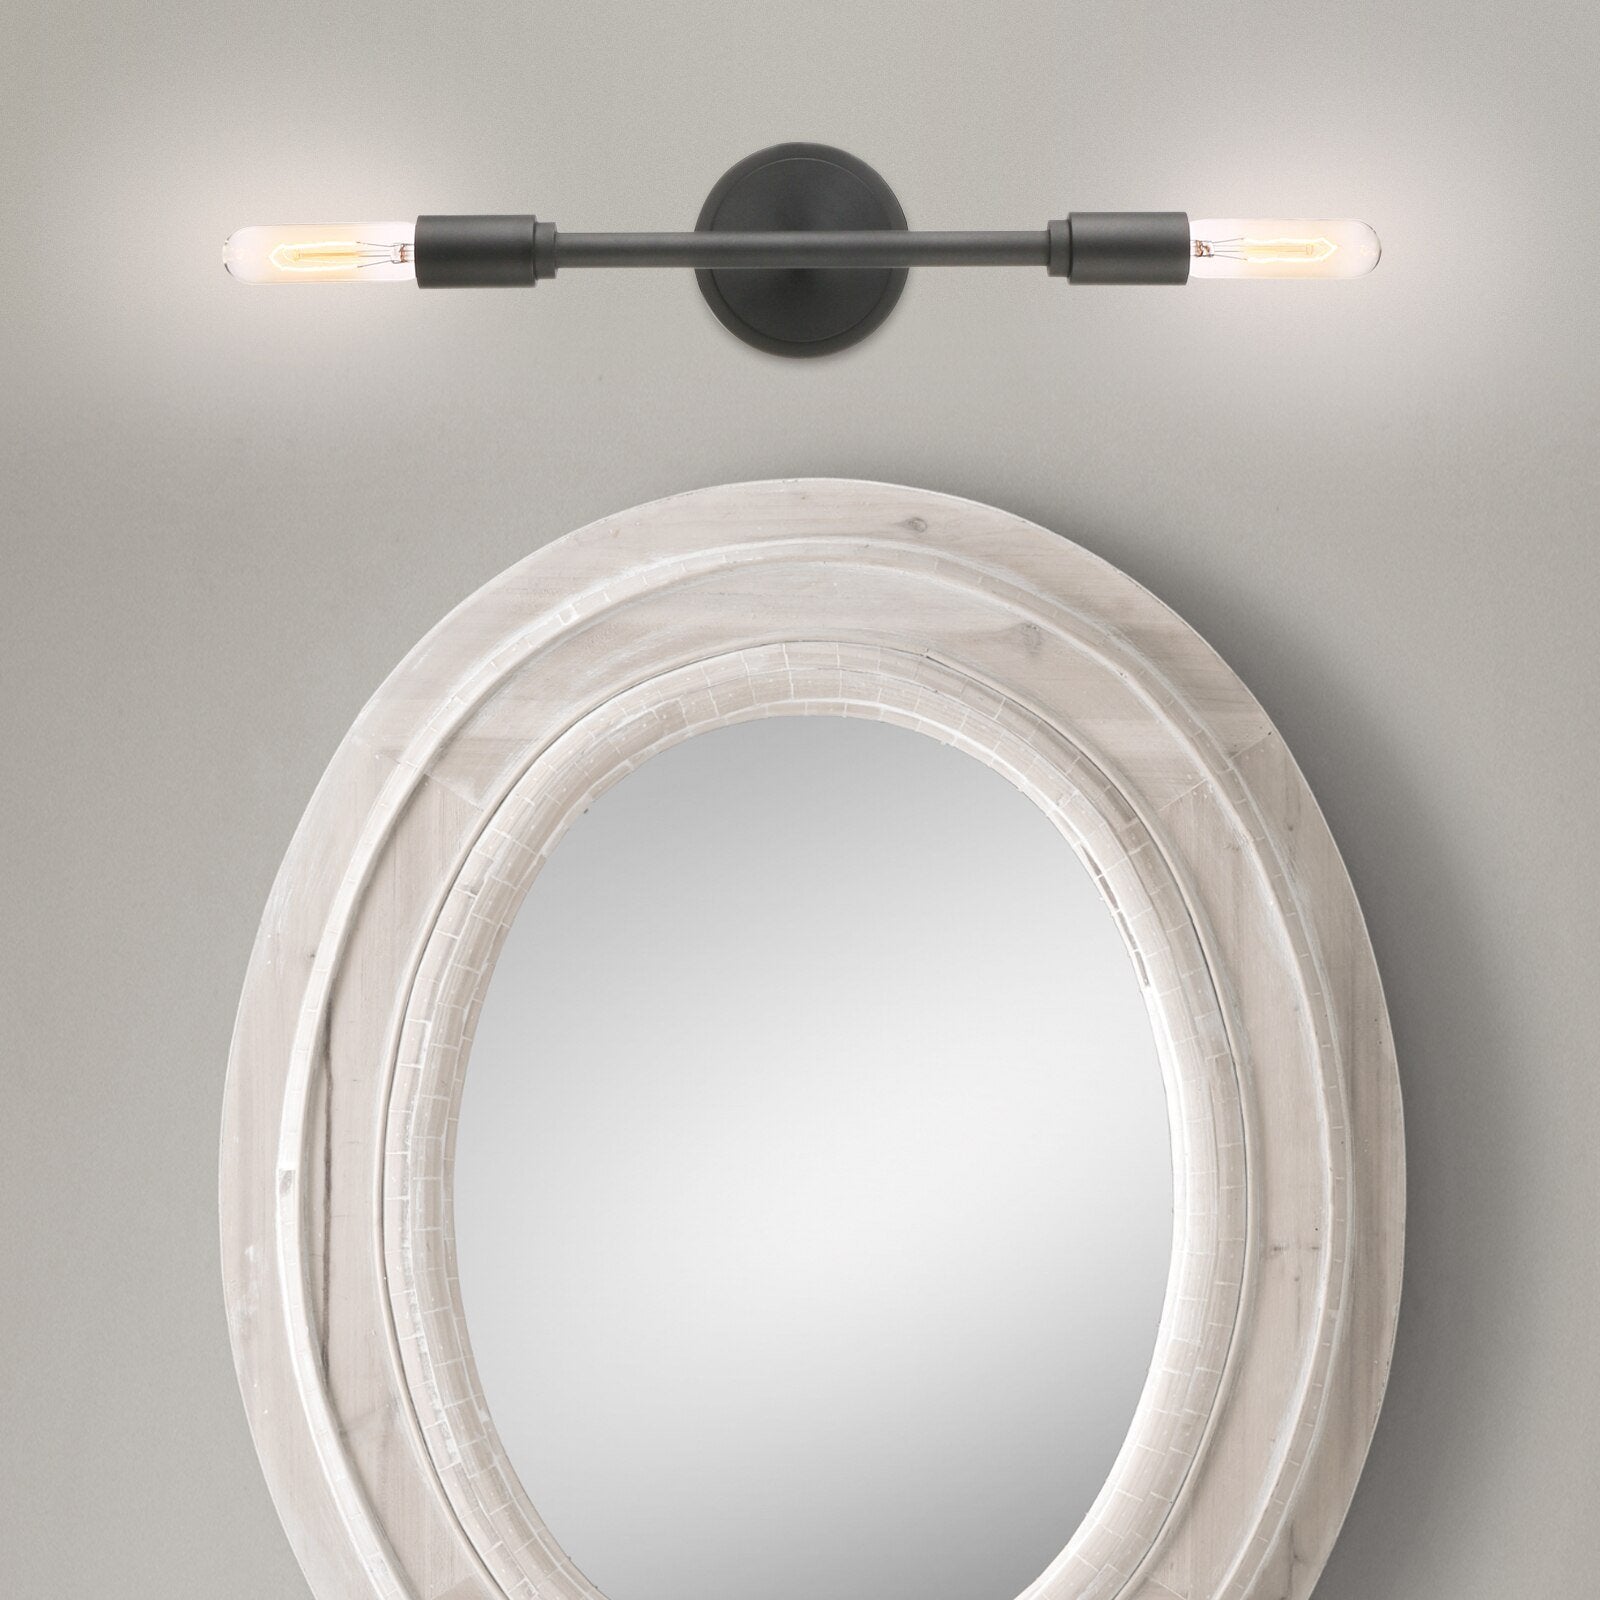 Choi - Horizontal Minimalist Wall Lamp photo - LIGHTING Ecrudeco